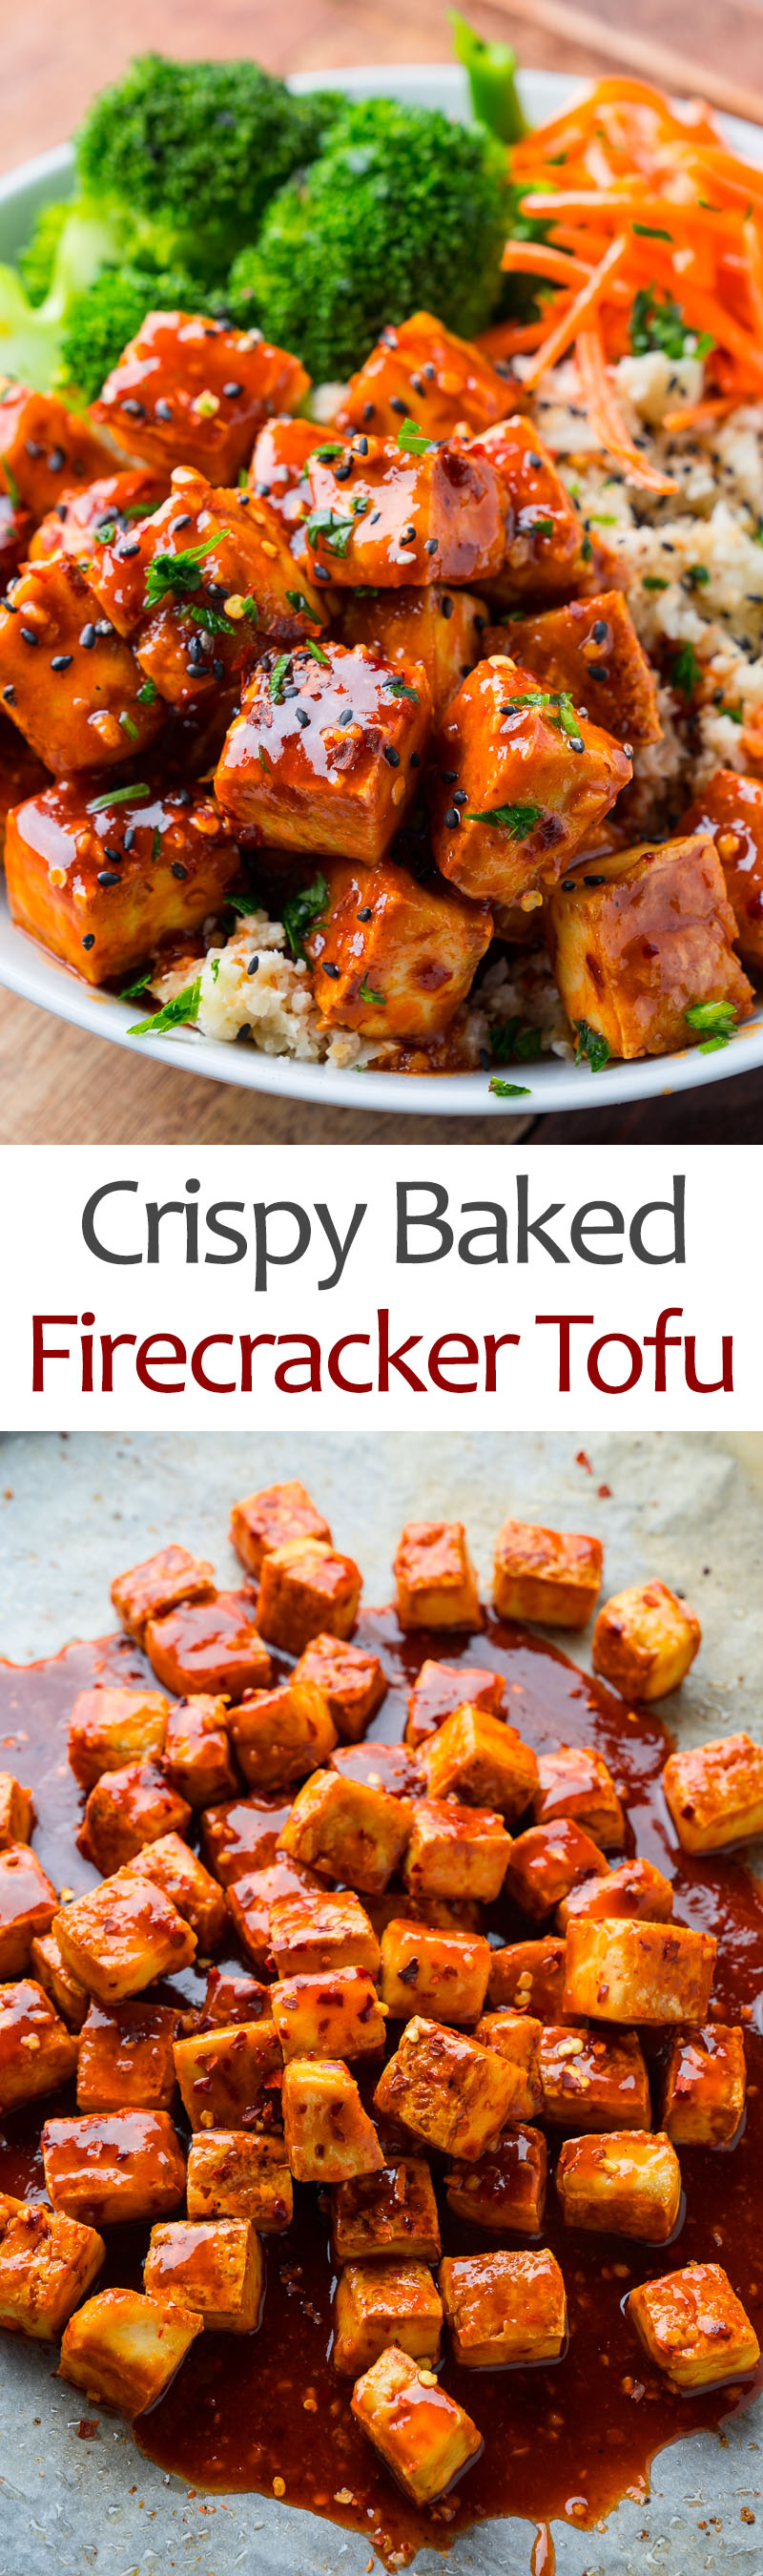 Crispy Baked Firecracker Tofu on Coconut Cauliflower Rice